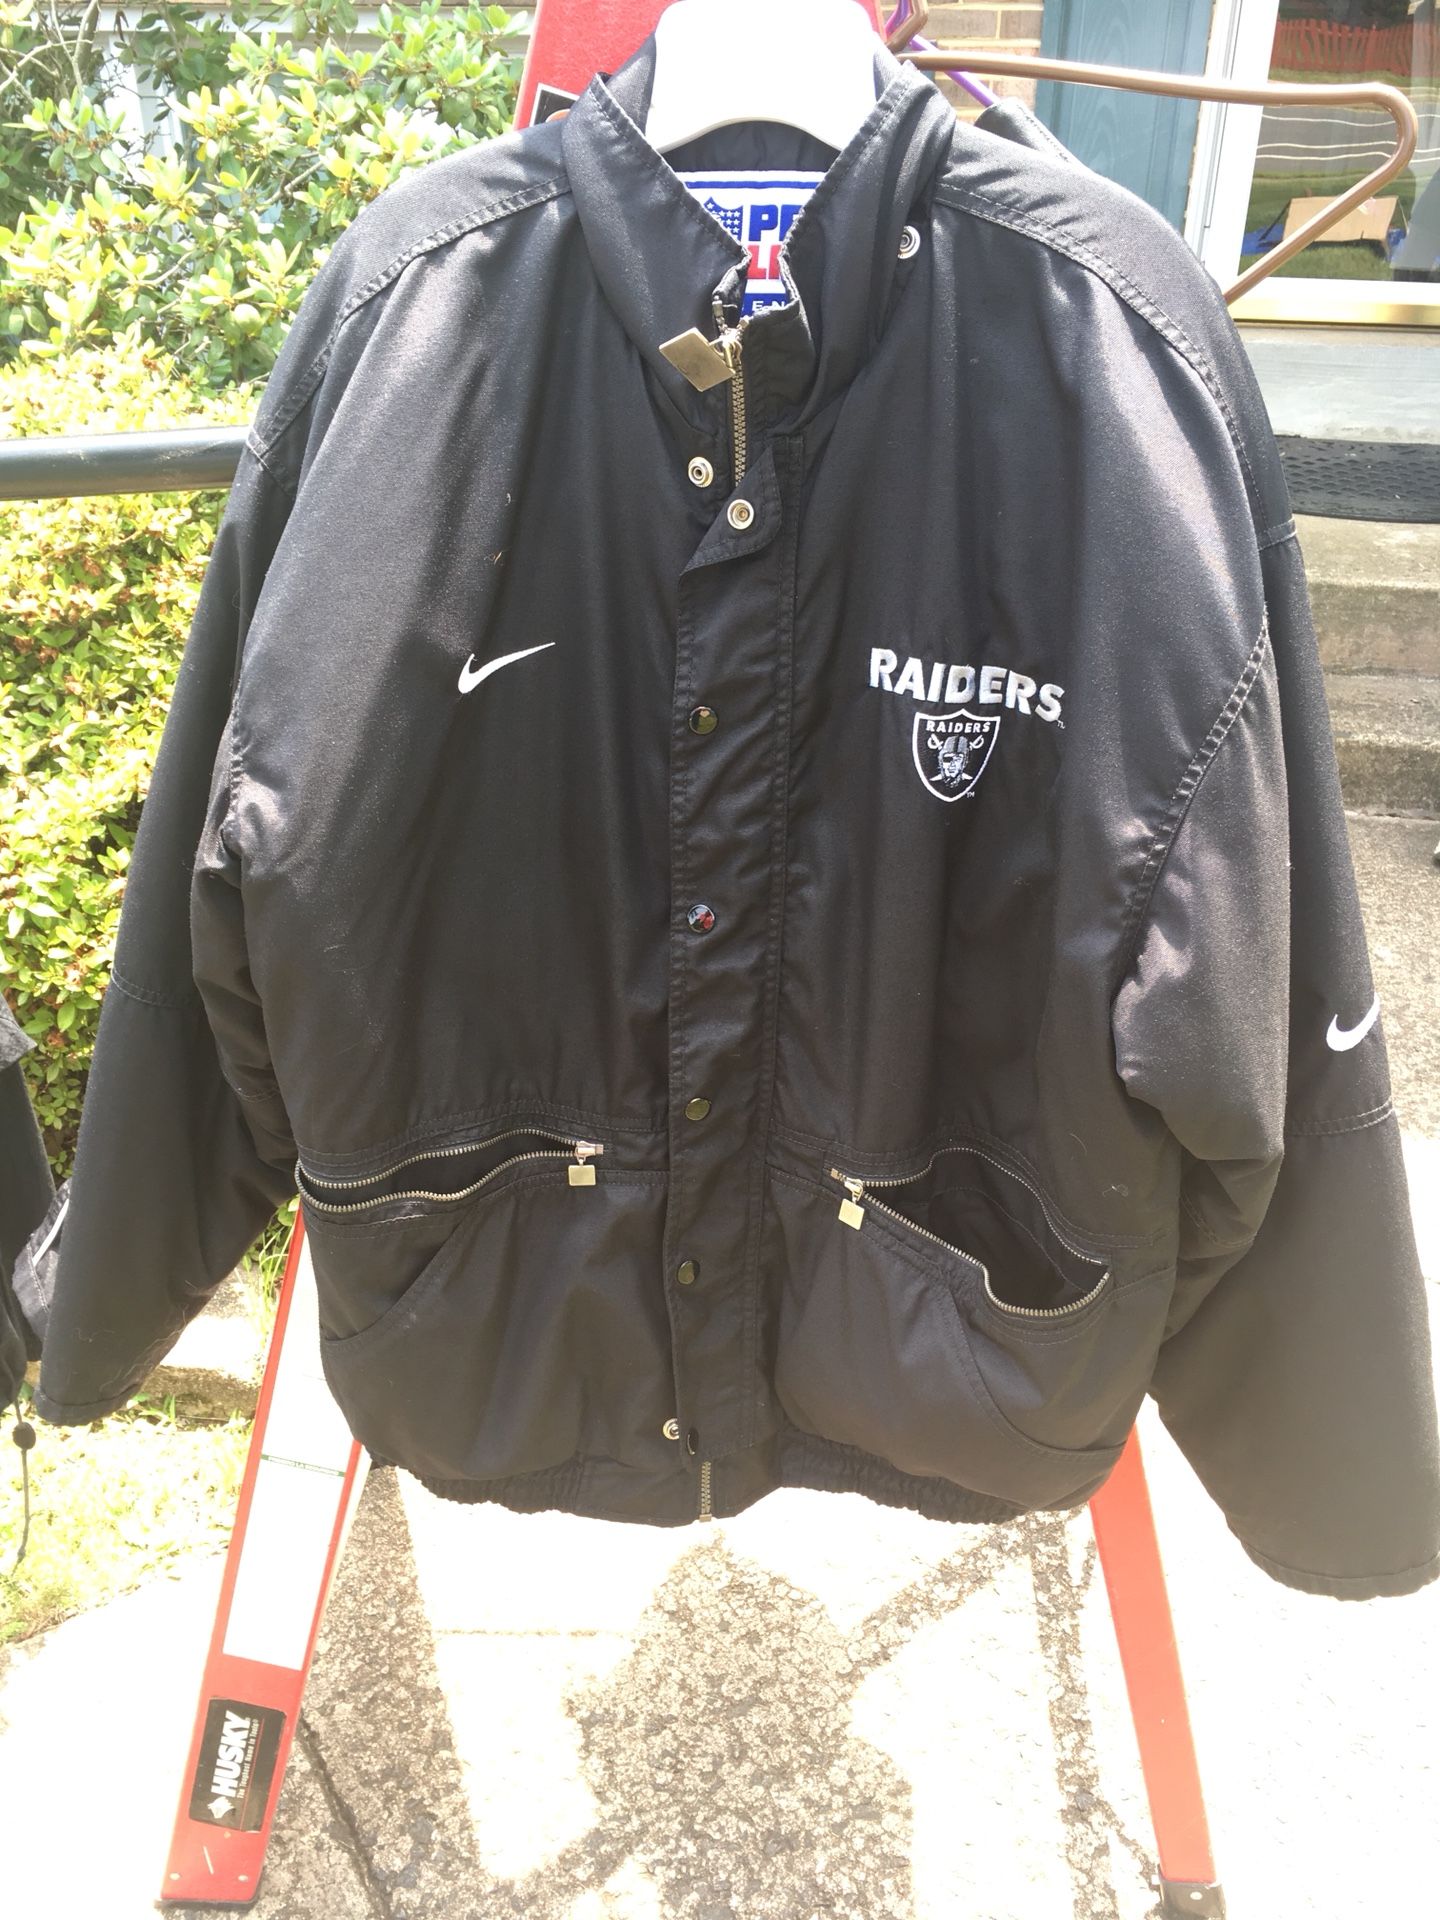 Oakland Raiders jacket